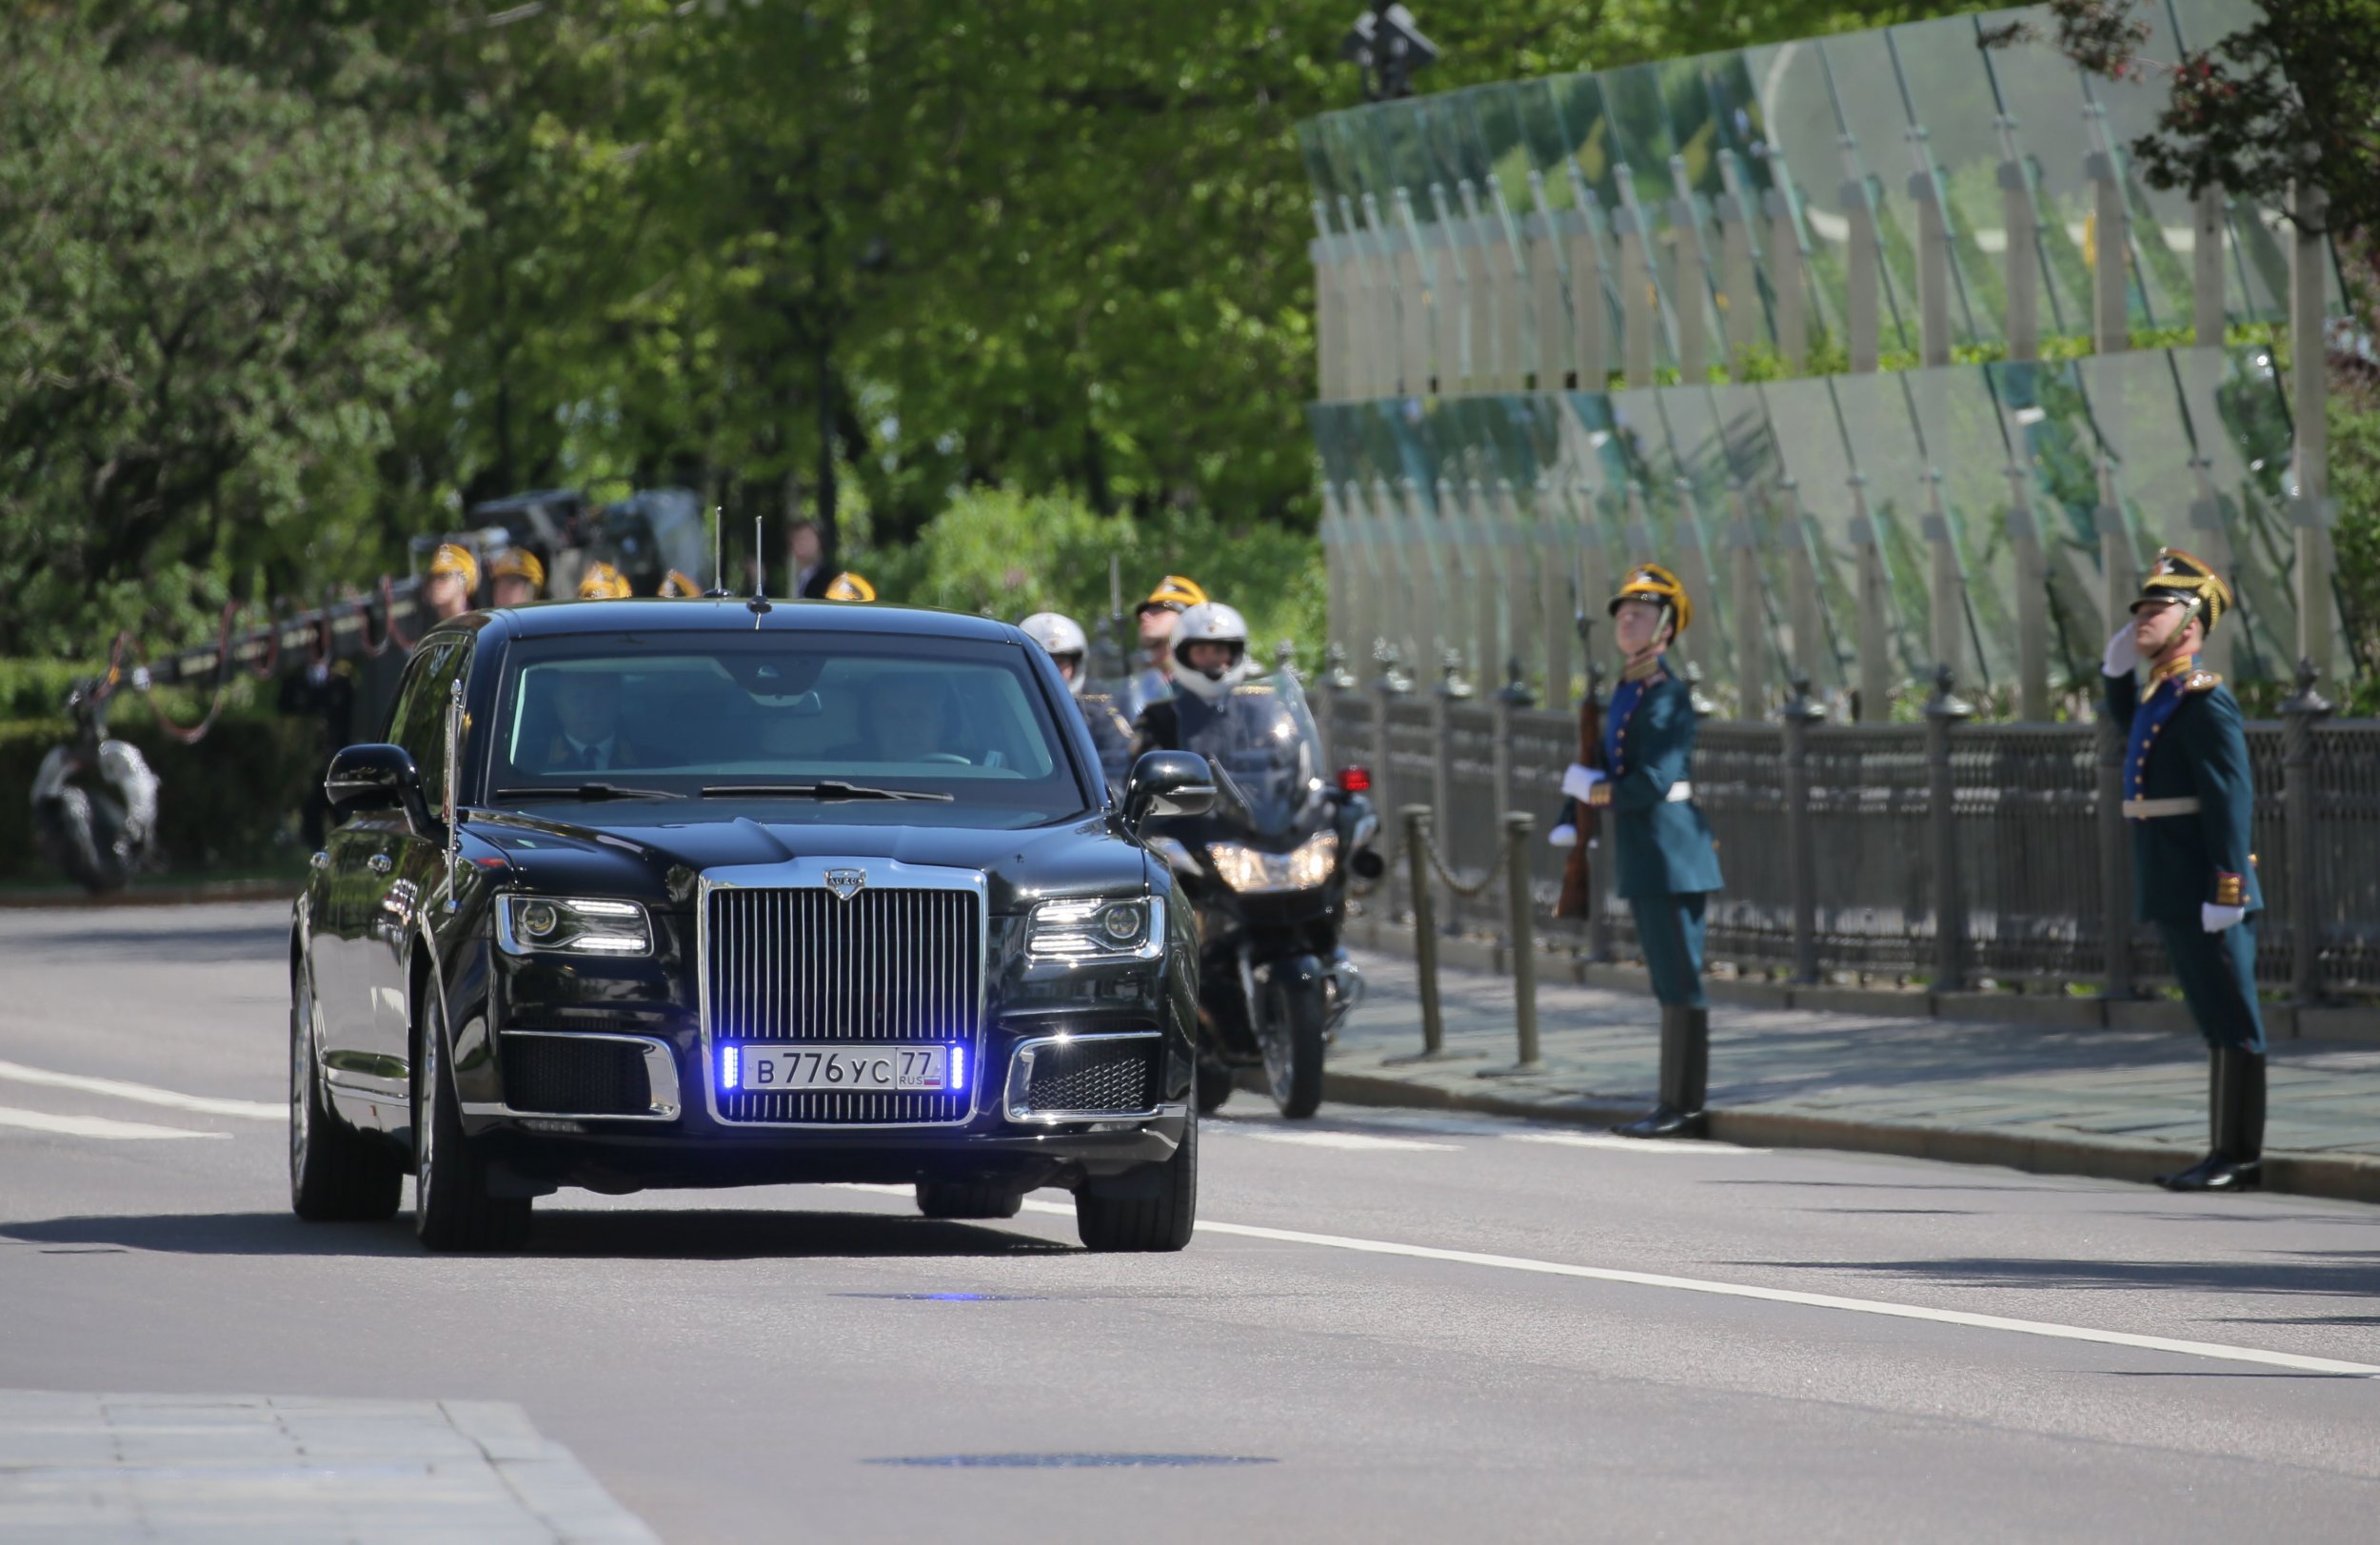 Президентский автомобиль. Аурус кортеж президента. Машина Путина Аурус. Aurus лимузин Путина.